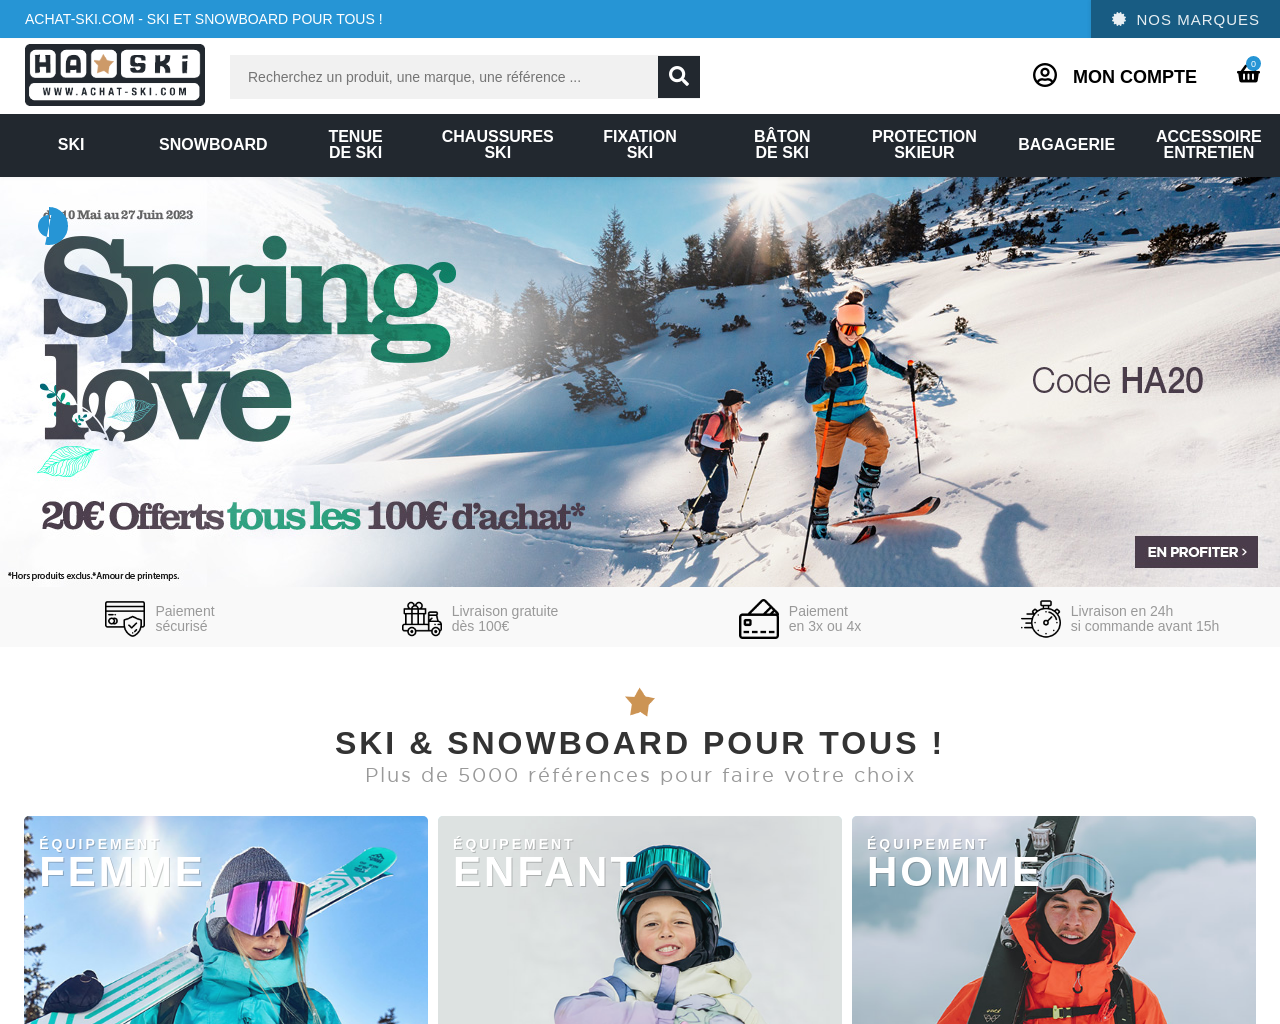 www.achat-ski.com